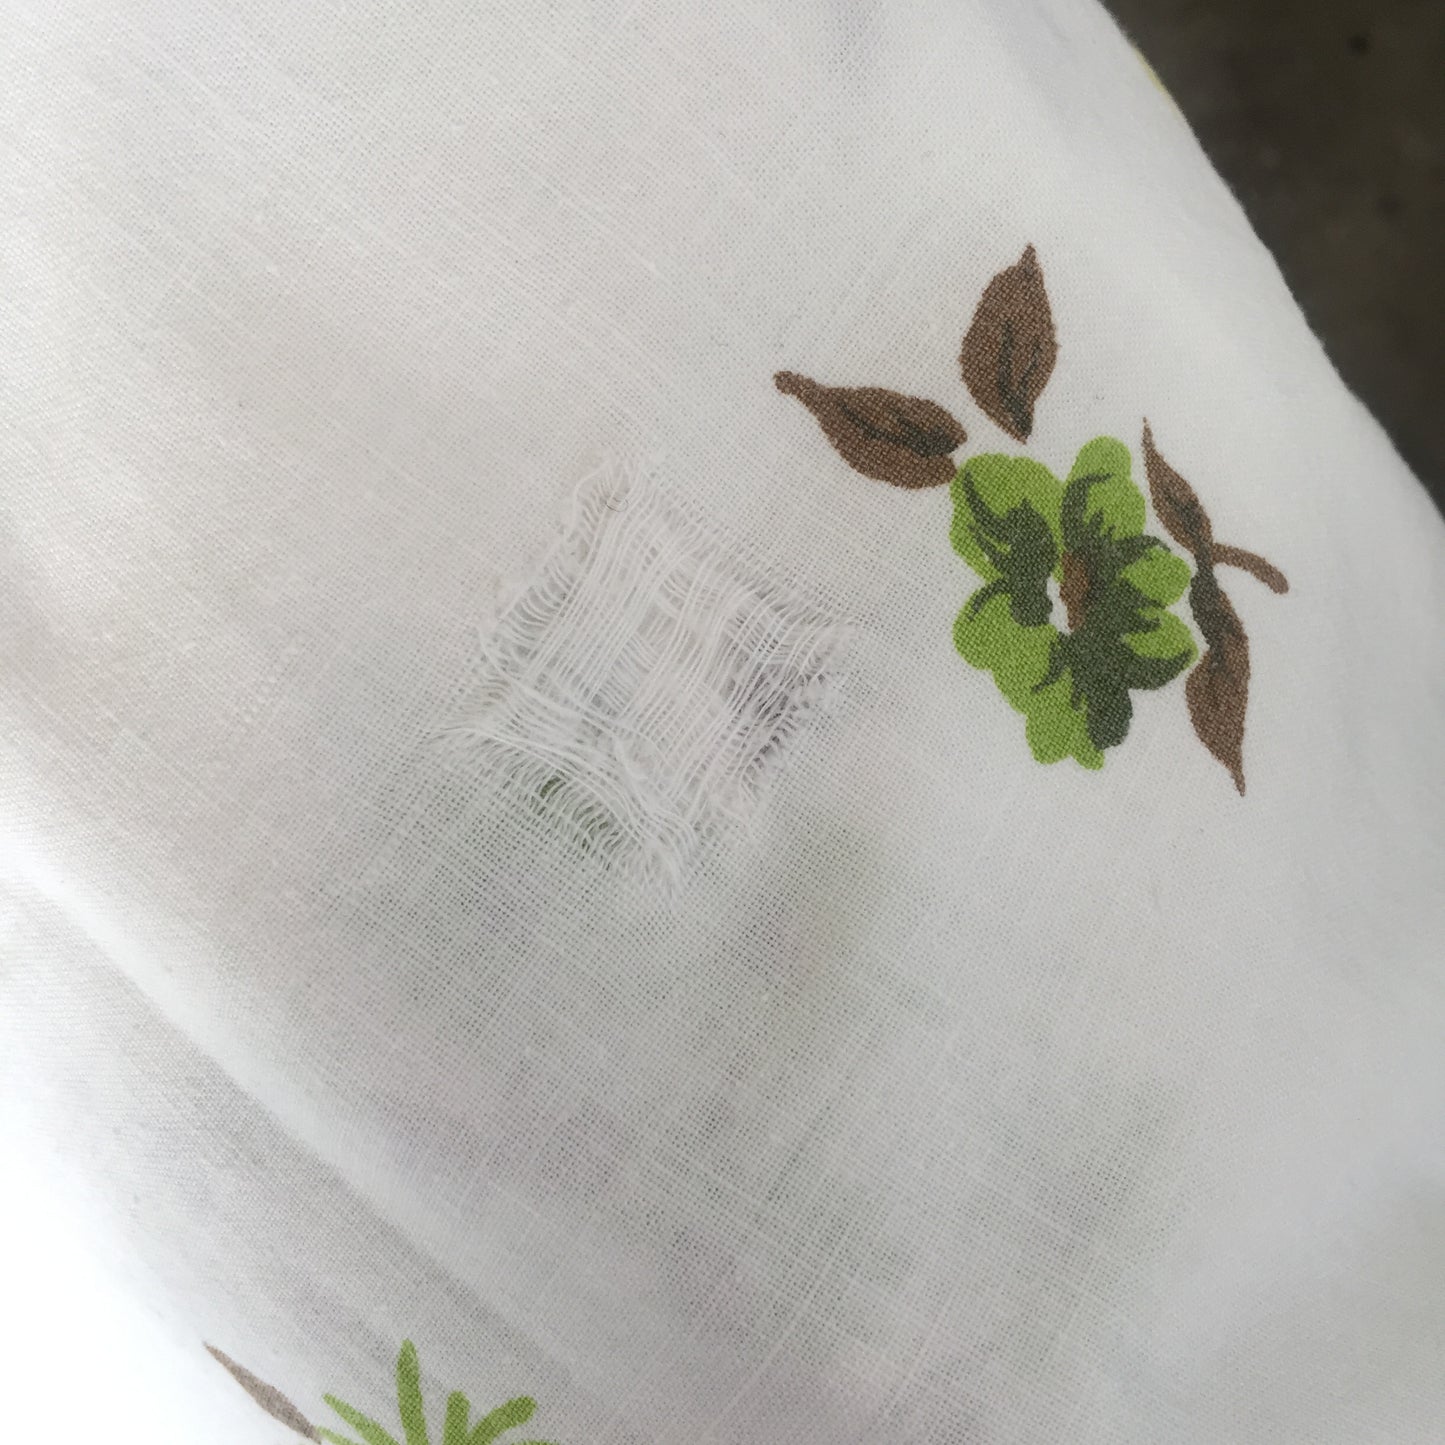 Vintage Cotton Sheet Green Floral PRINT Craft Fabric RETRO